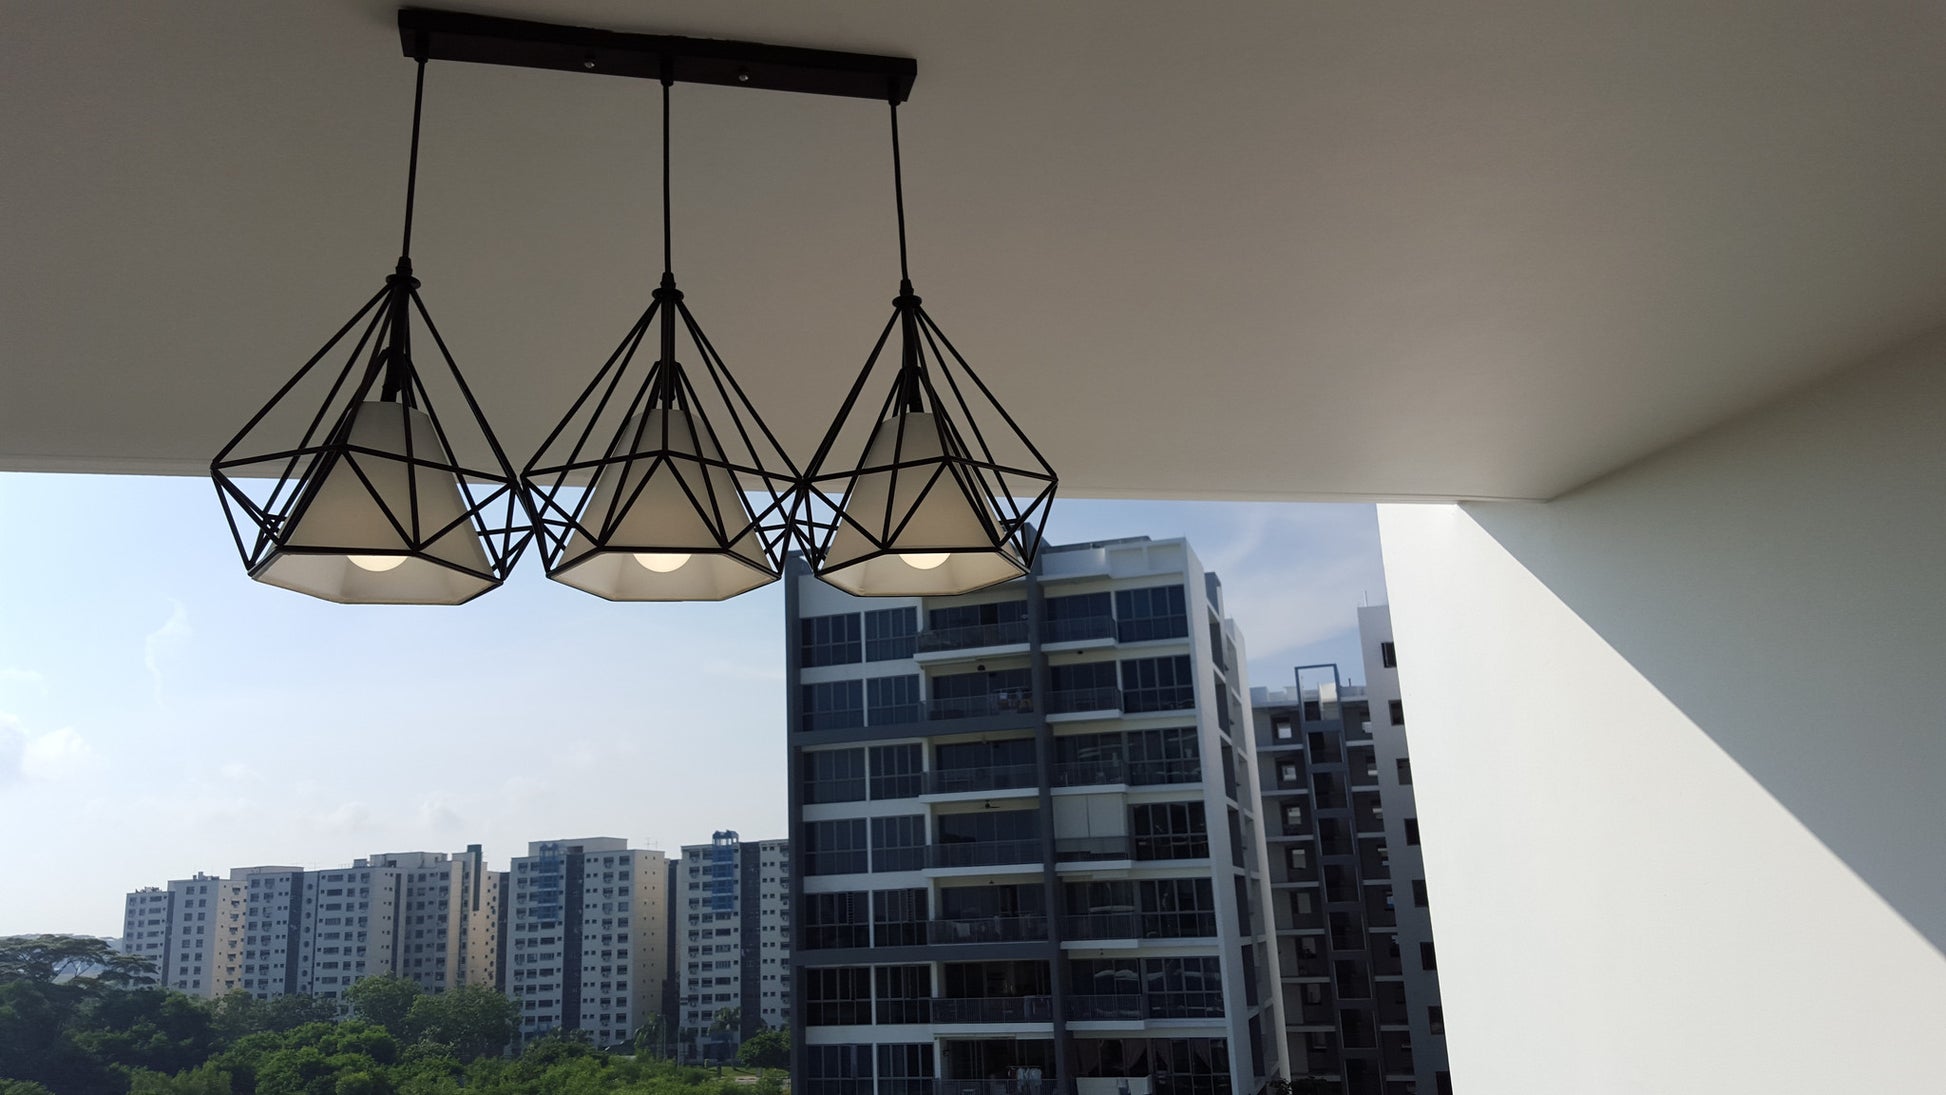 Pendant Lamp (KR- reproduction 3 in 1) - Three Cubes Lightings (Singapore)